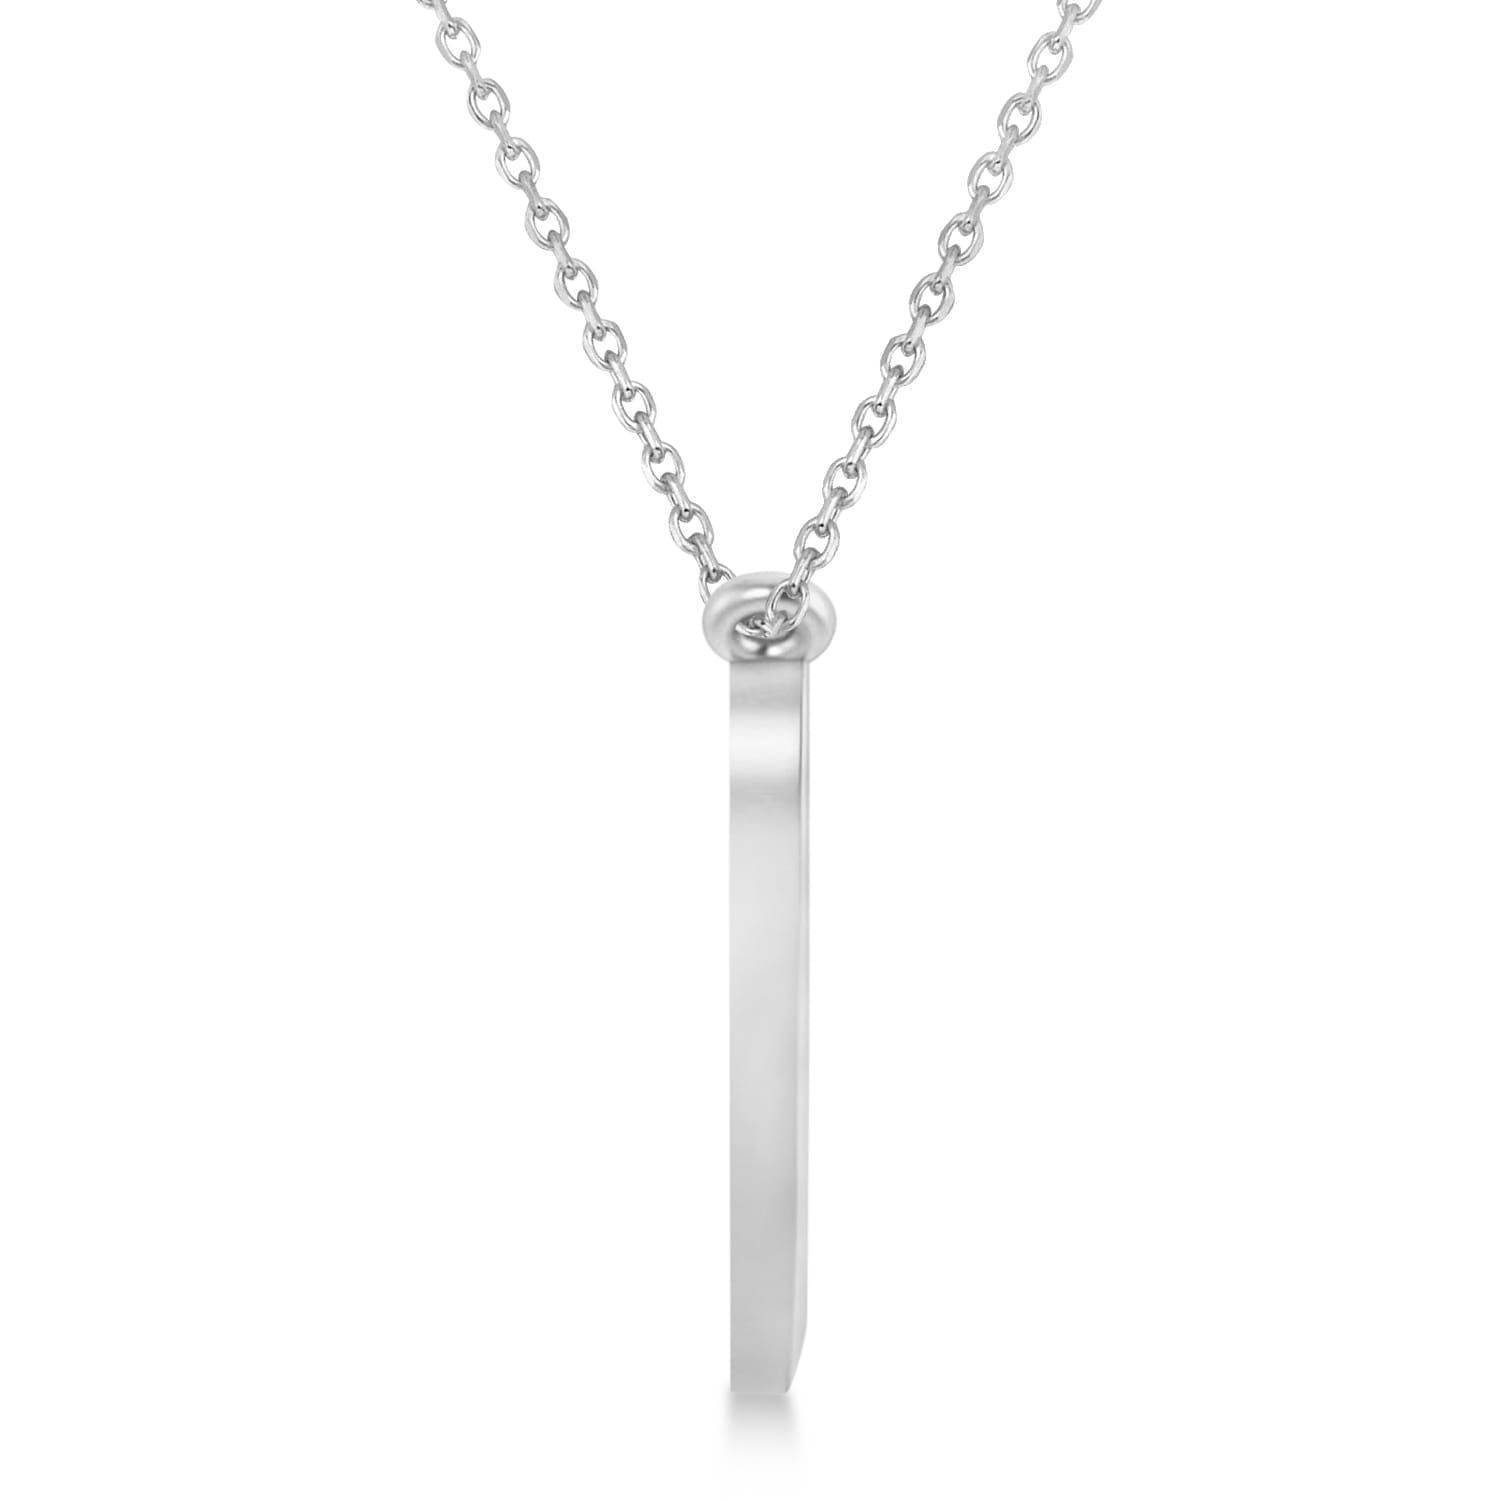 Geometric Heart-Shape Pendant Necklace 14k White Gold